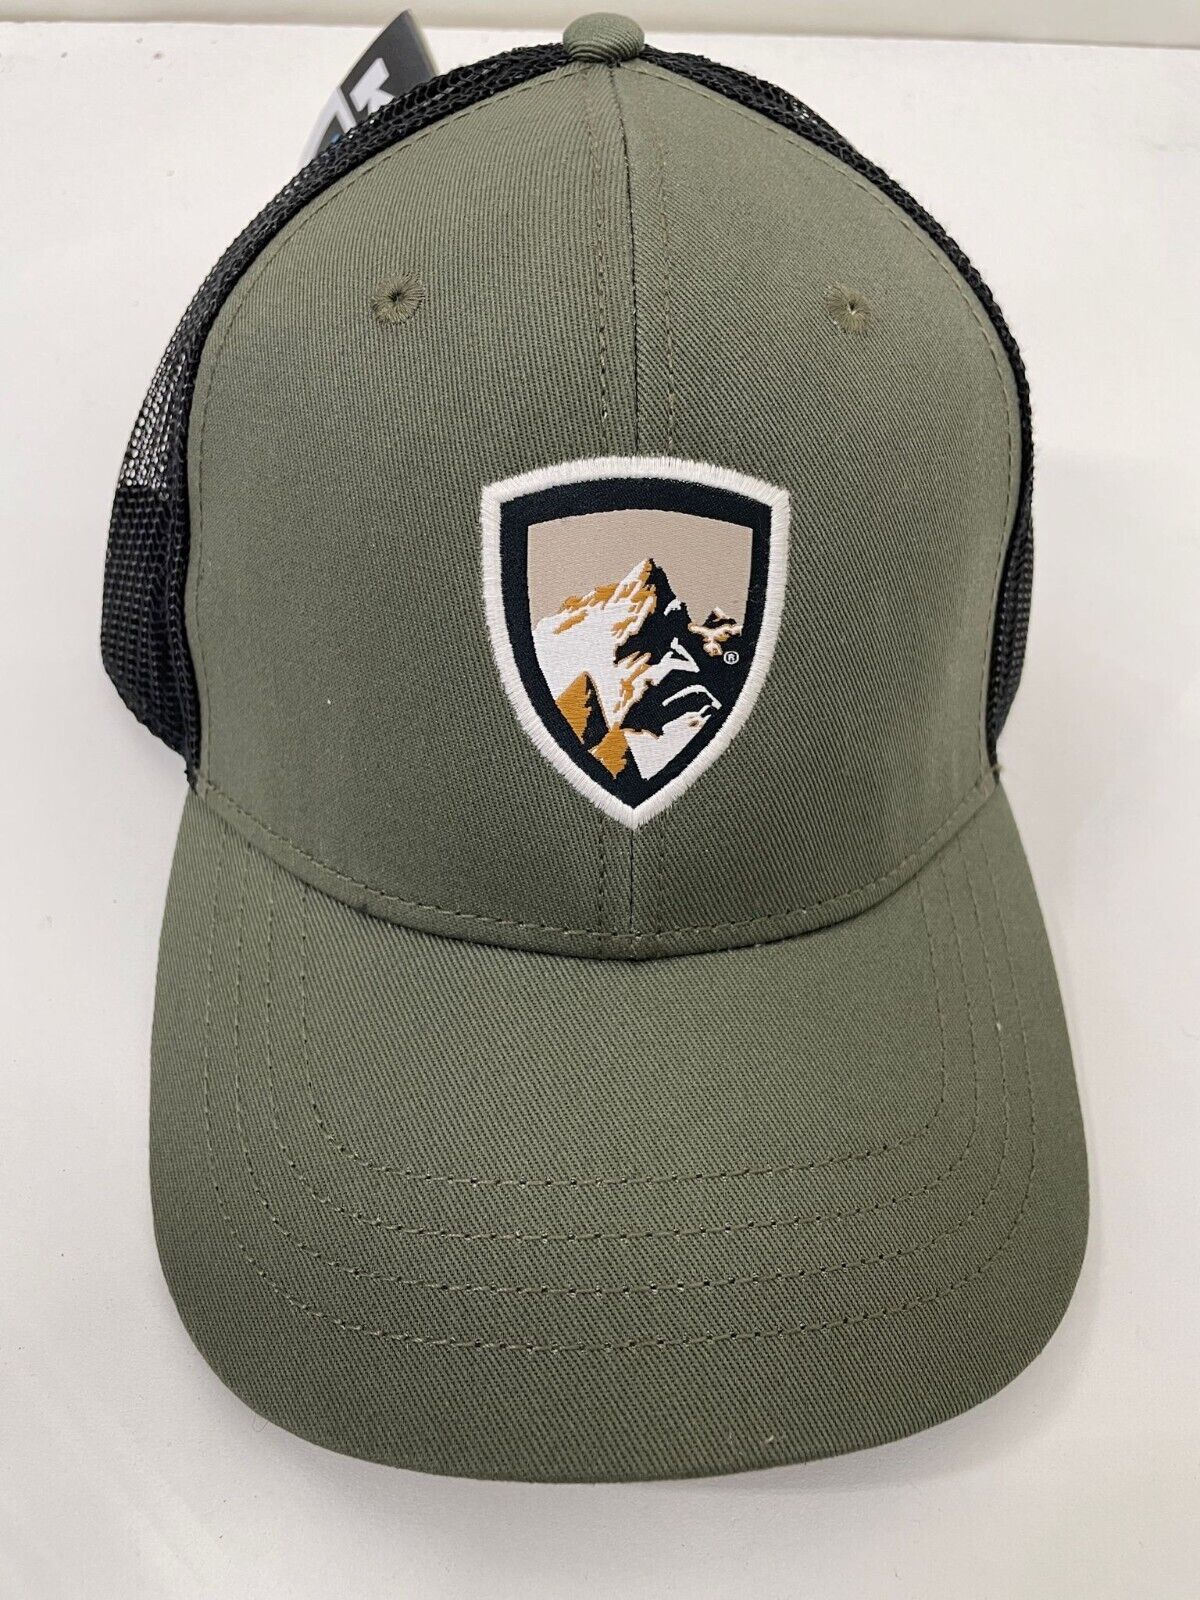 Kuhl Mens Adult Trucker Mesh Snapback Hat Cap Olive Green Carbon 830 One Size